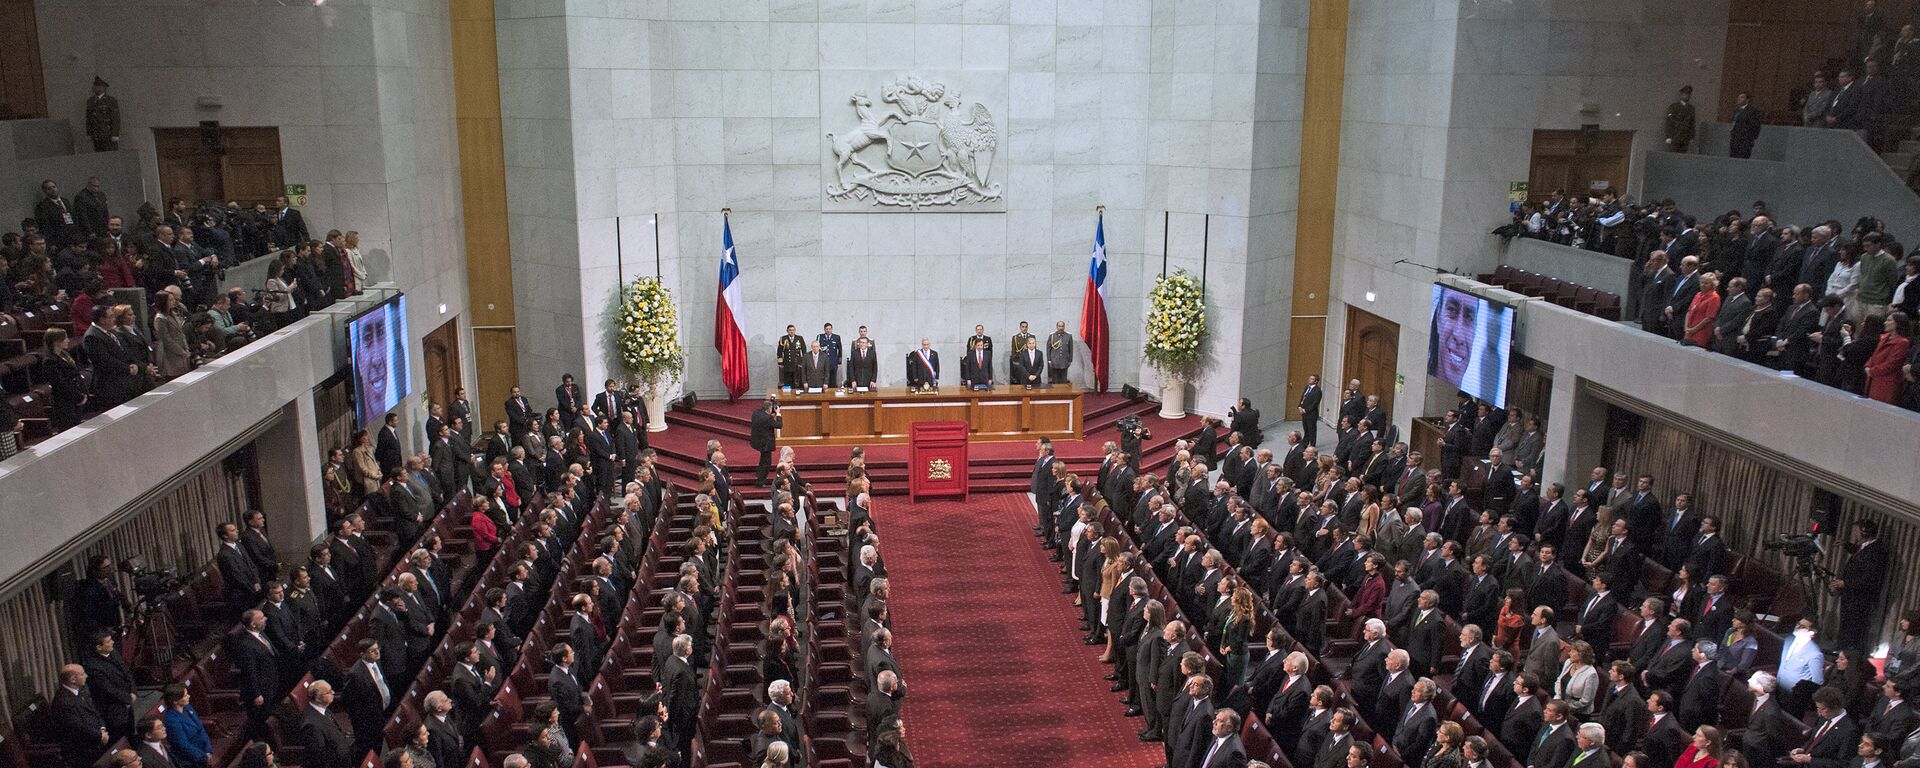 Congreso de Chile - Sputnik Mundo, 1920, 17.04.2019